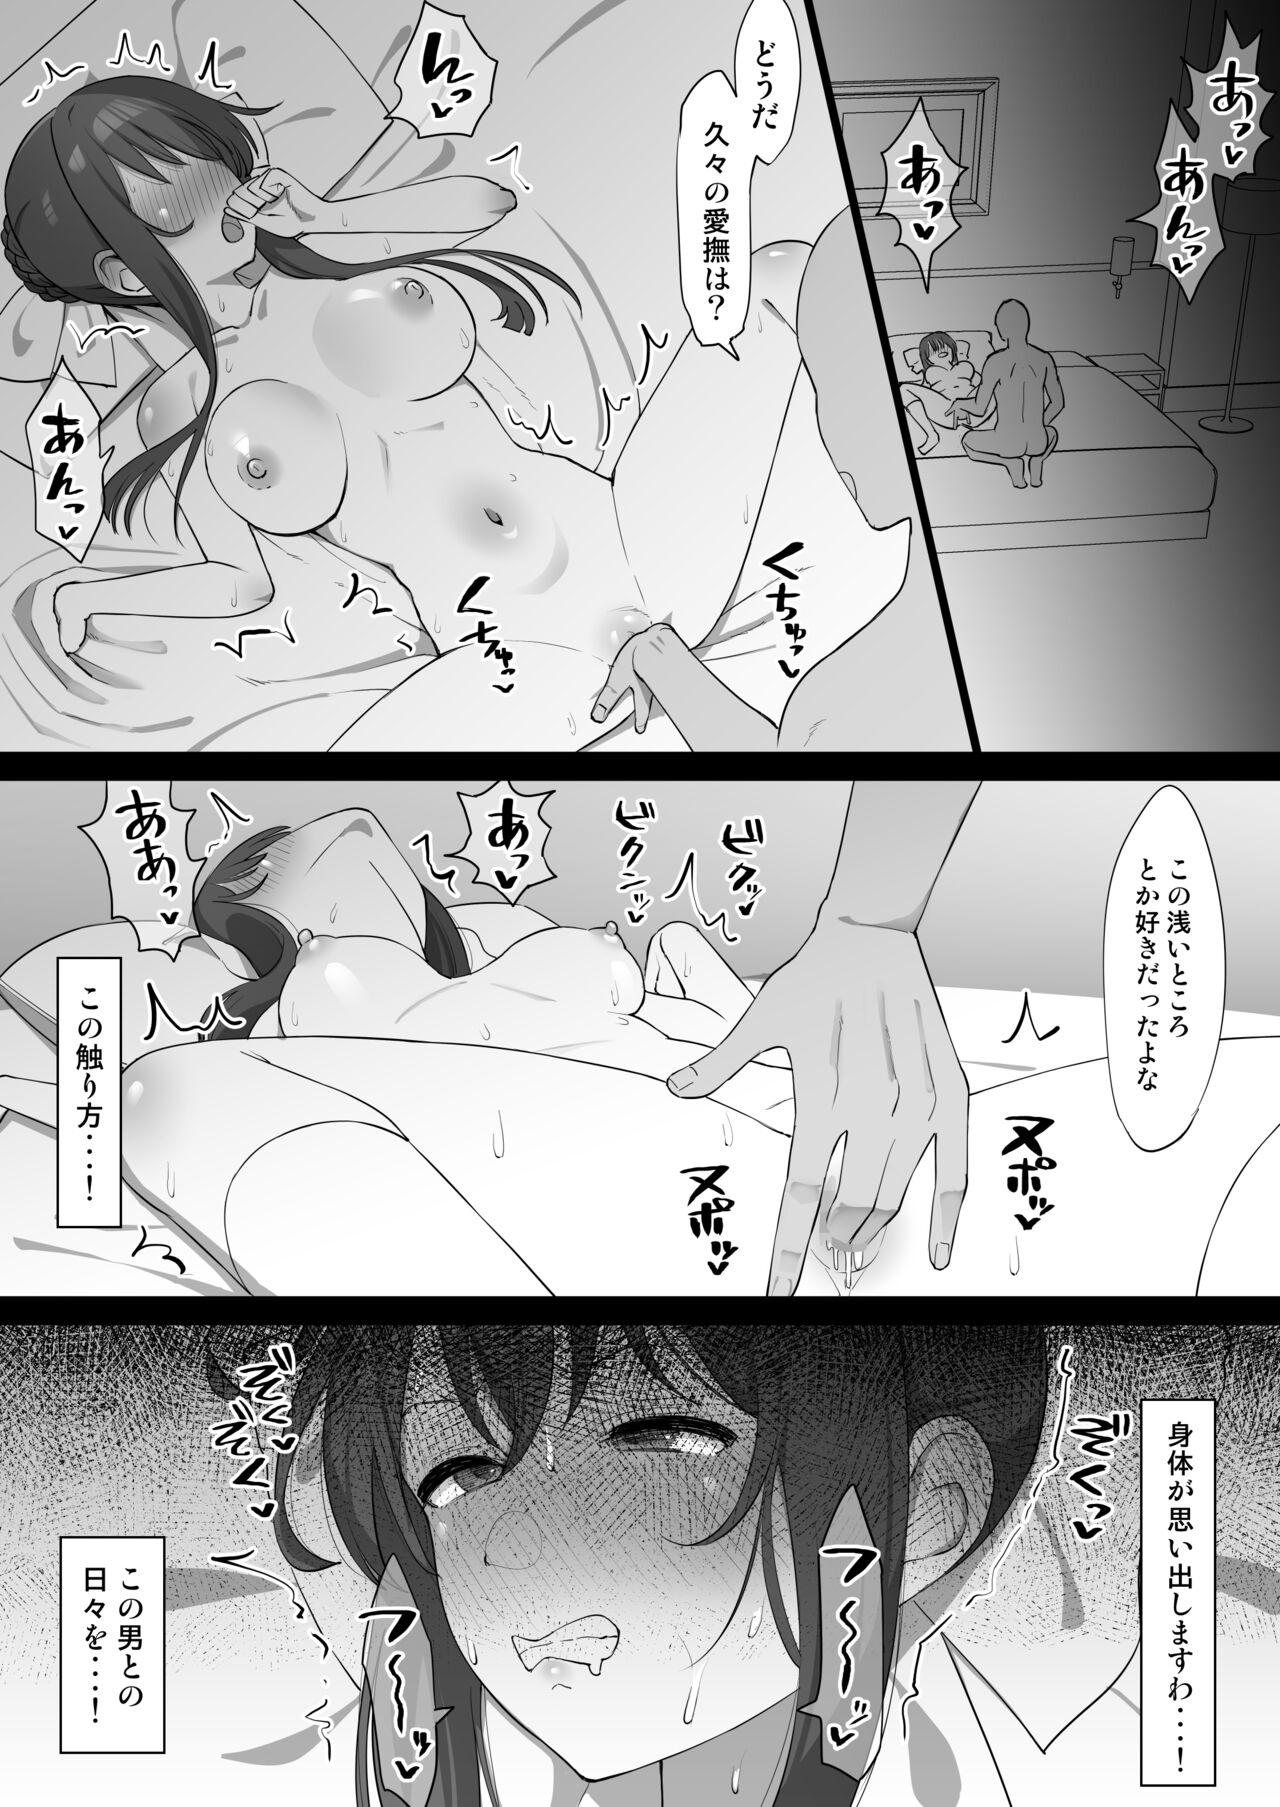 Kiss Tamao ga Otoko to Hisashiburi ni Ecchi suru Manga - Strawberry panic Dominant - Picture 2